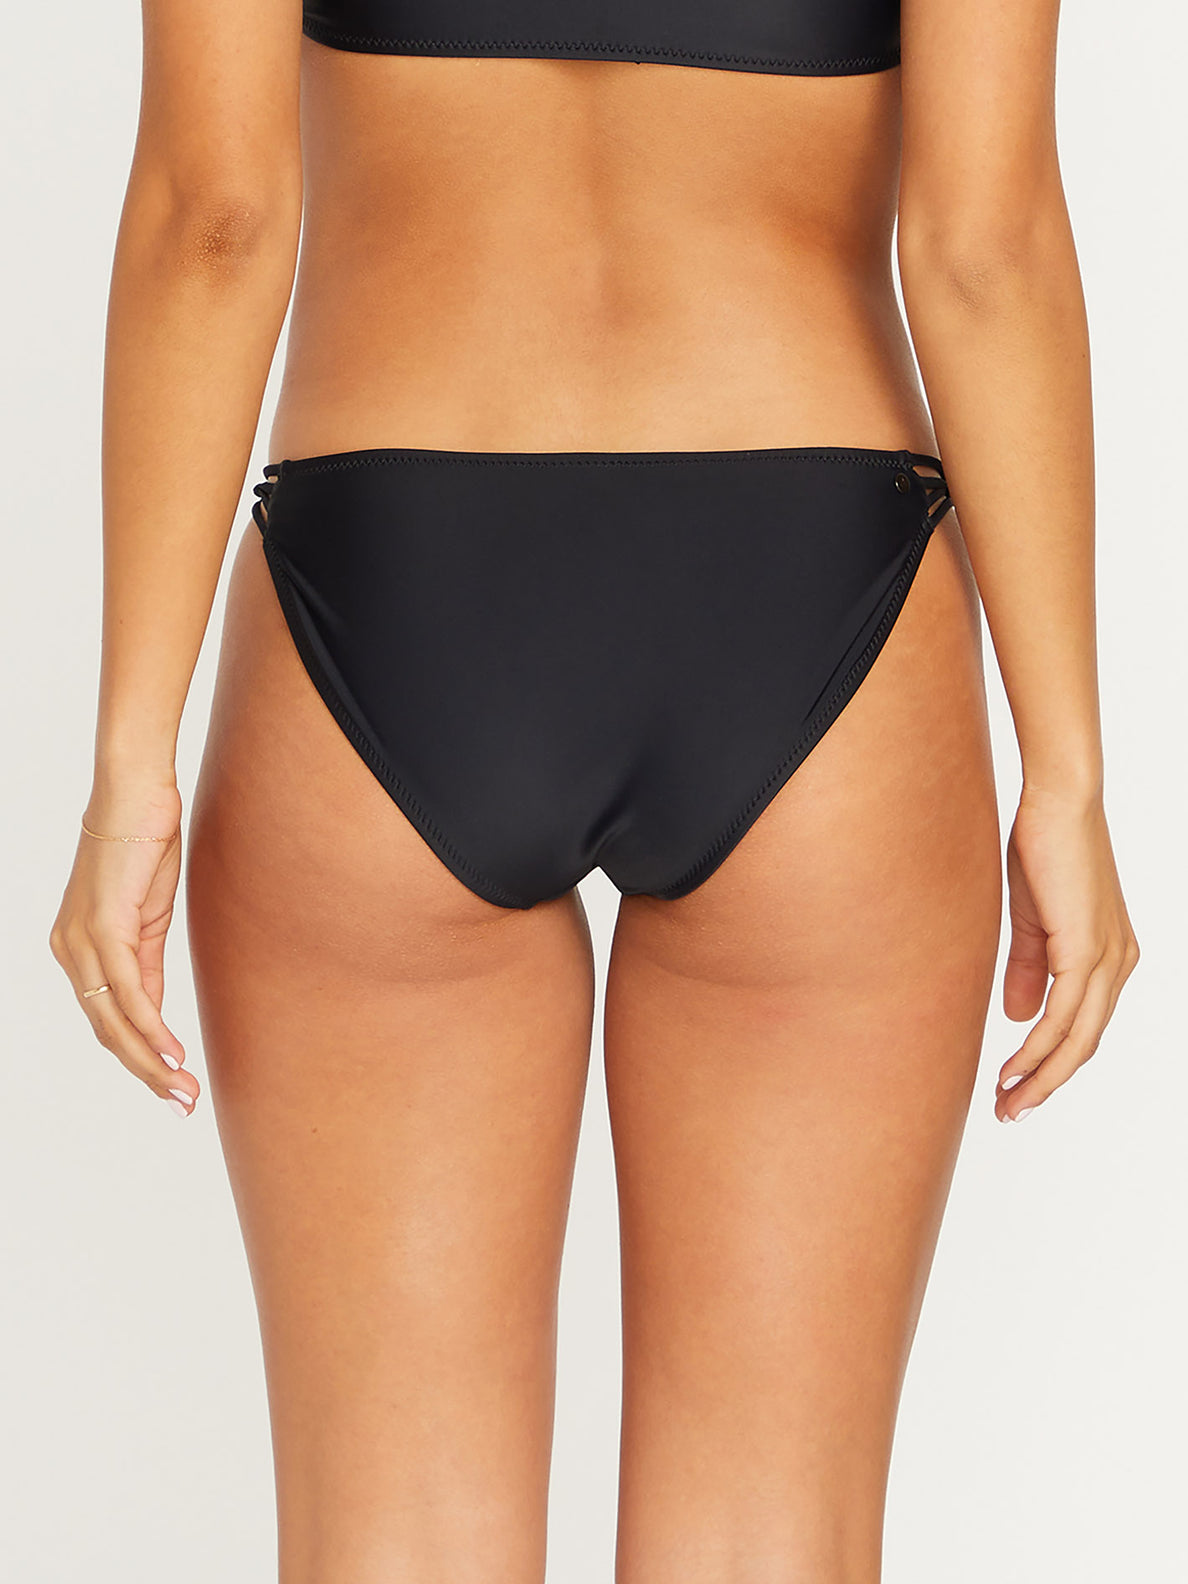 Simply Solid Full Bikini Bottom - BLACK (O2212310_BLK) [1]